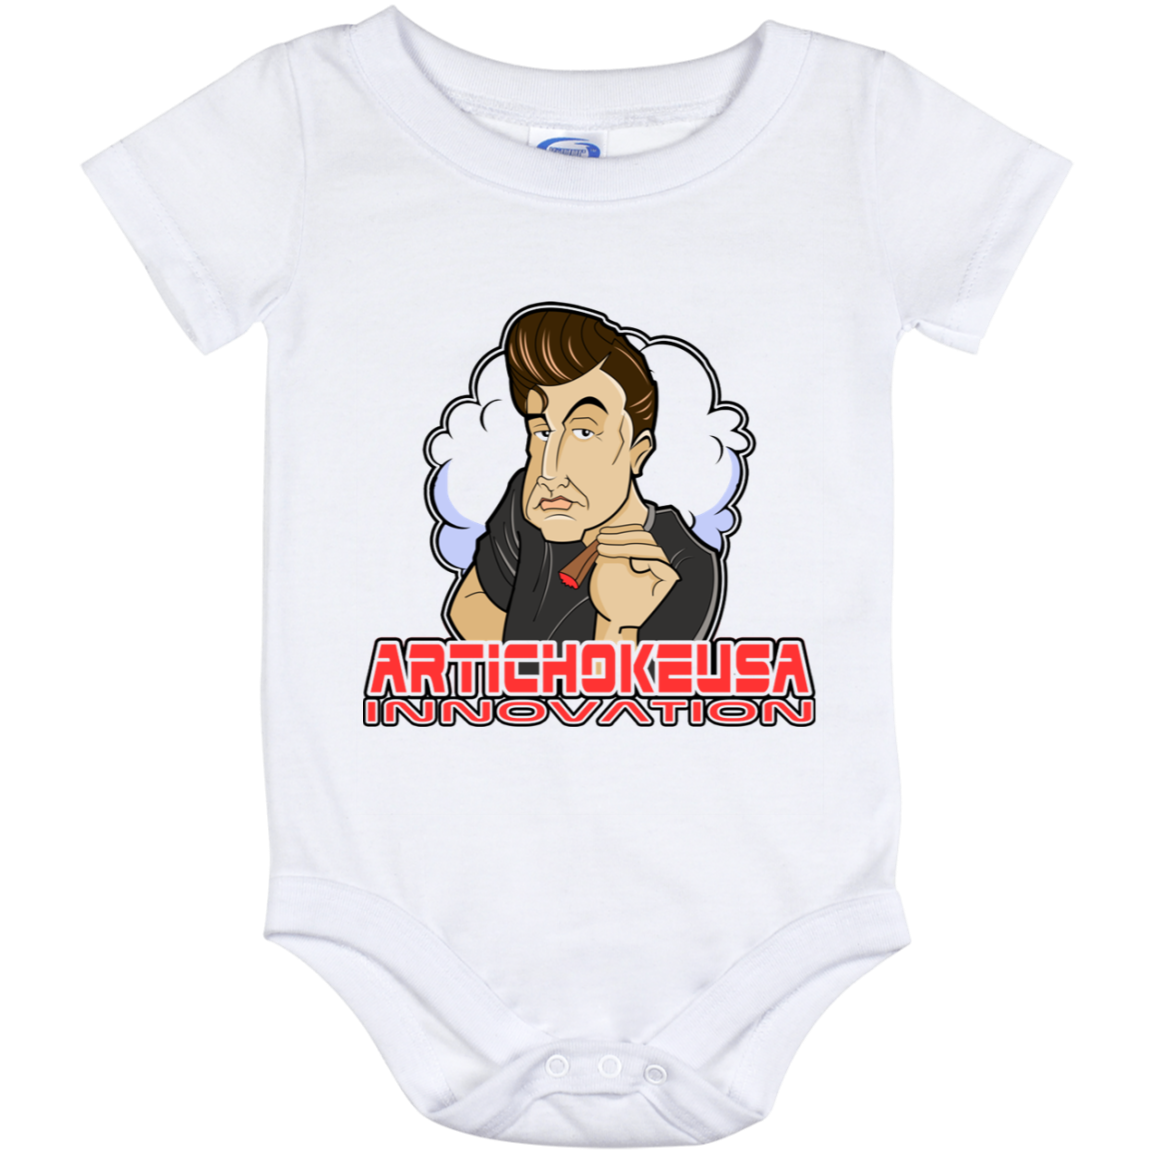 ArtichokeUSA Custom Design. Innovation. Elon Musk Parody Fan Art. Baby Onesie 12 Month